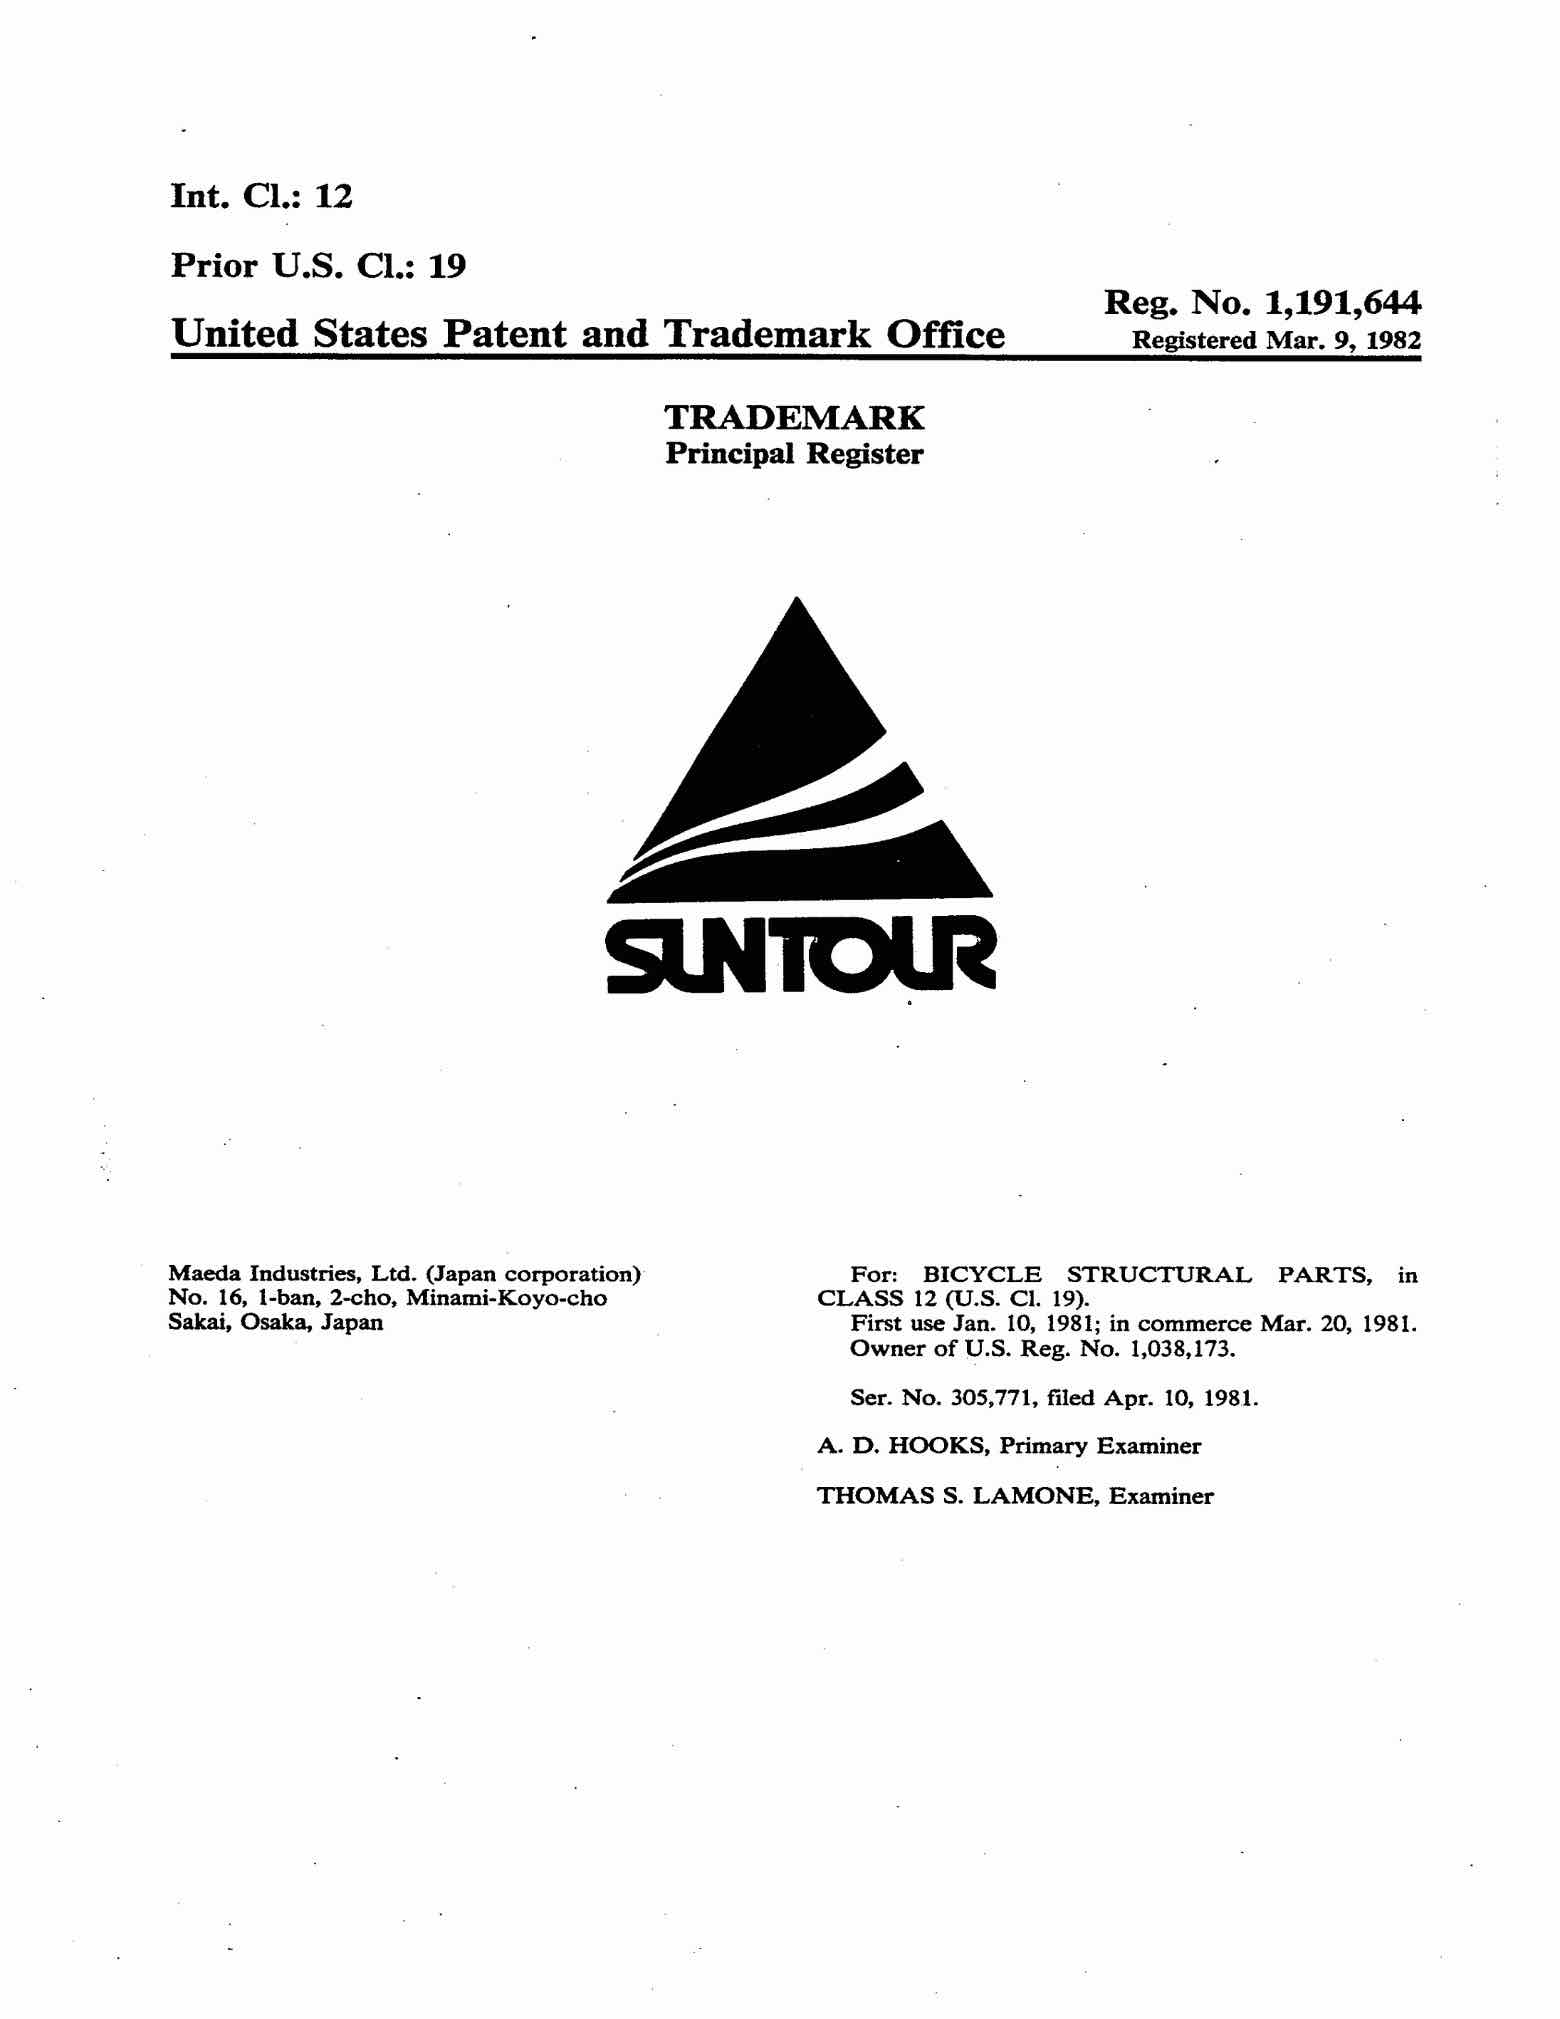 US Trademark 1,191,644 - SunTour main image